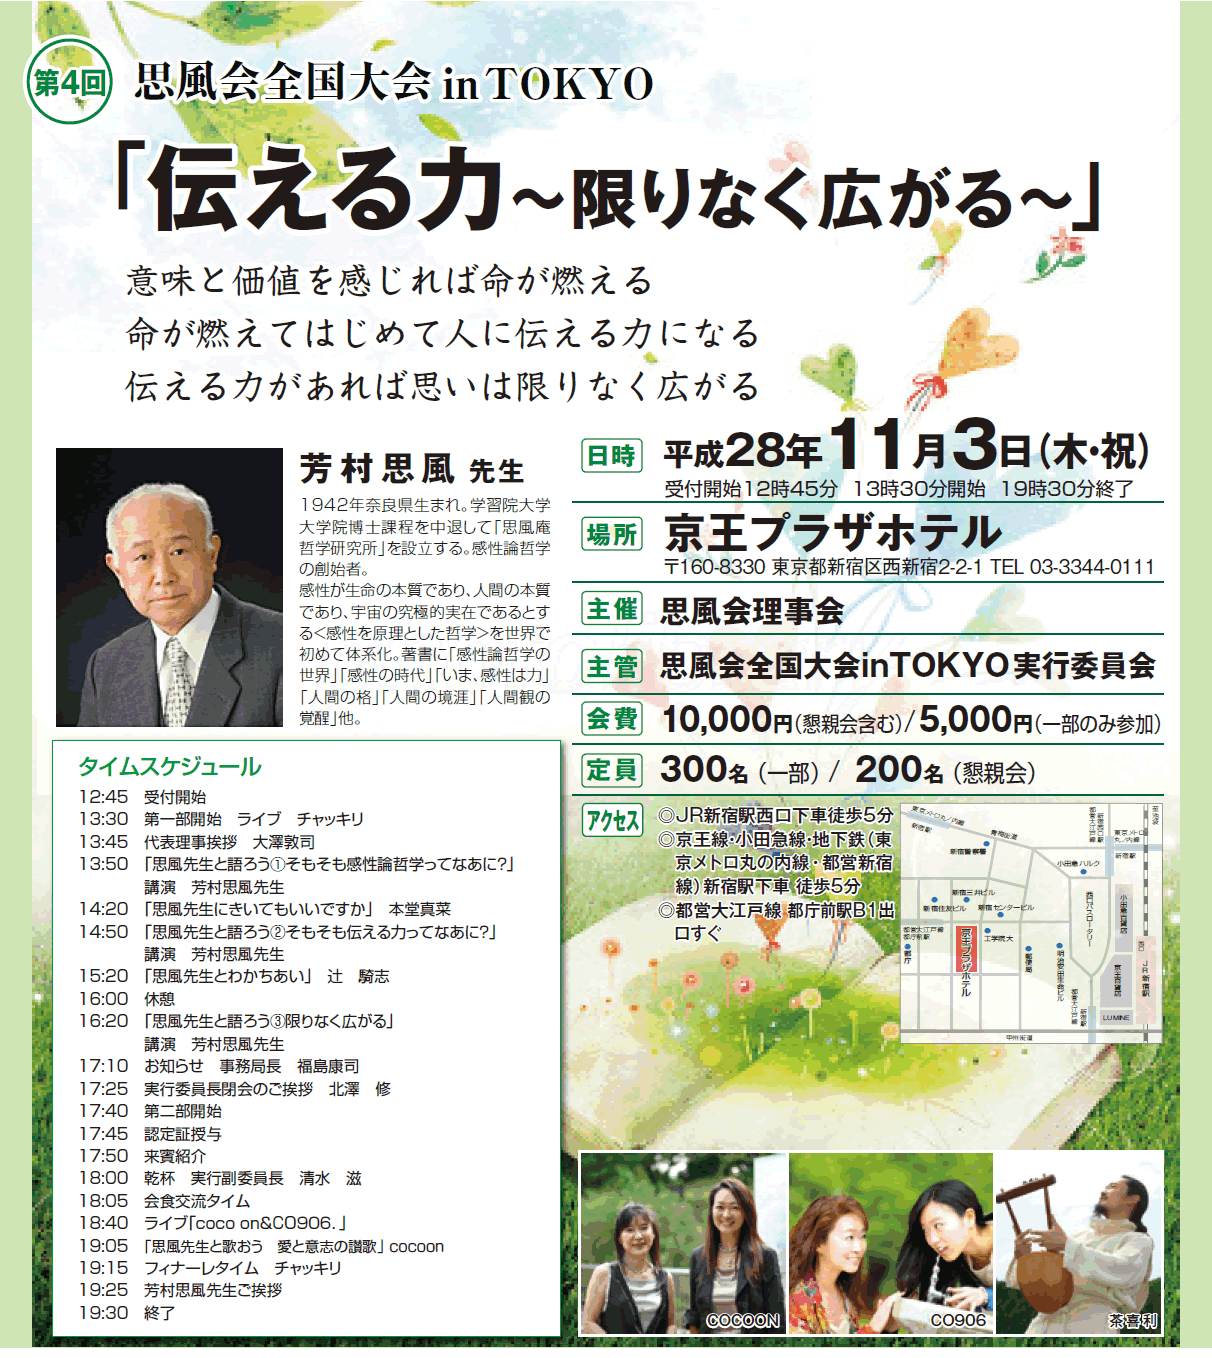 2018shifukai - 第6回思風会全国大会は2018年10月27日東京で開催します。